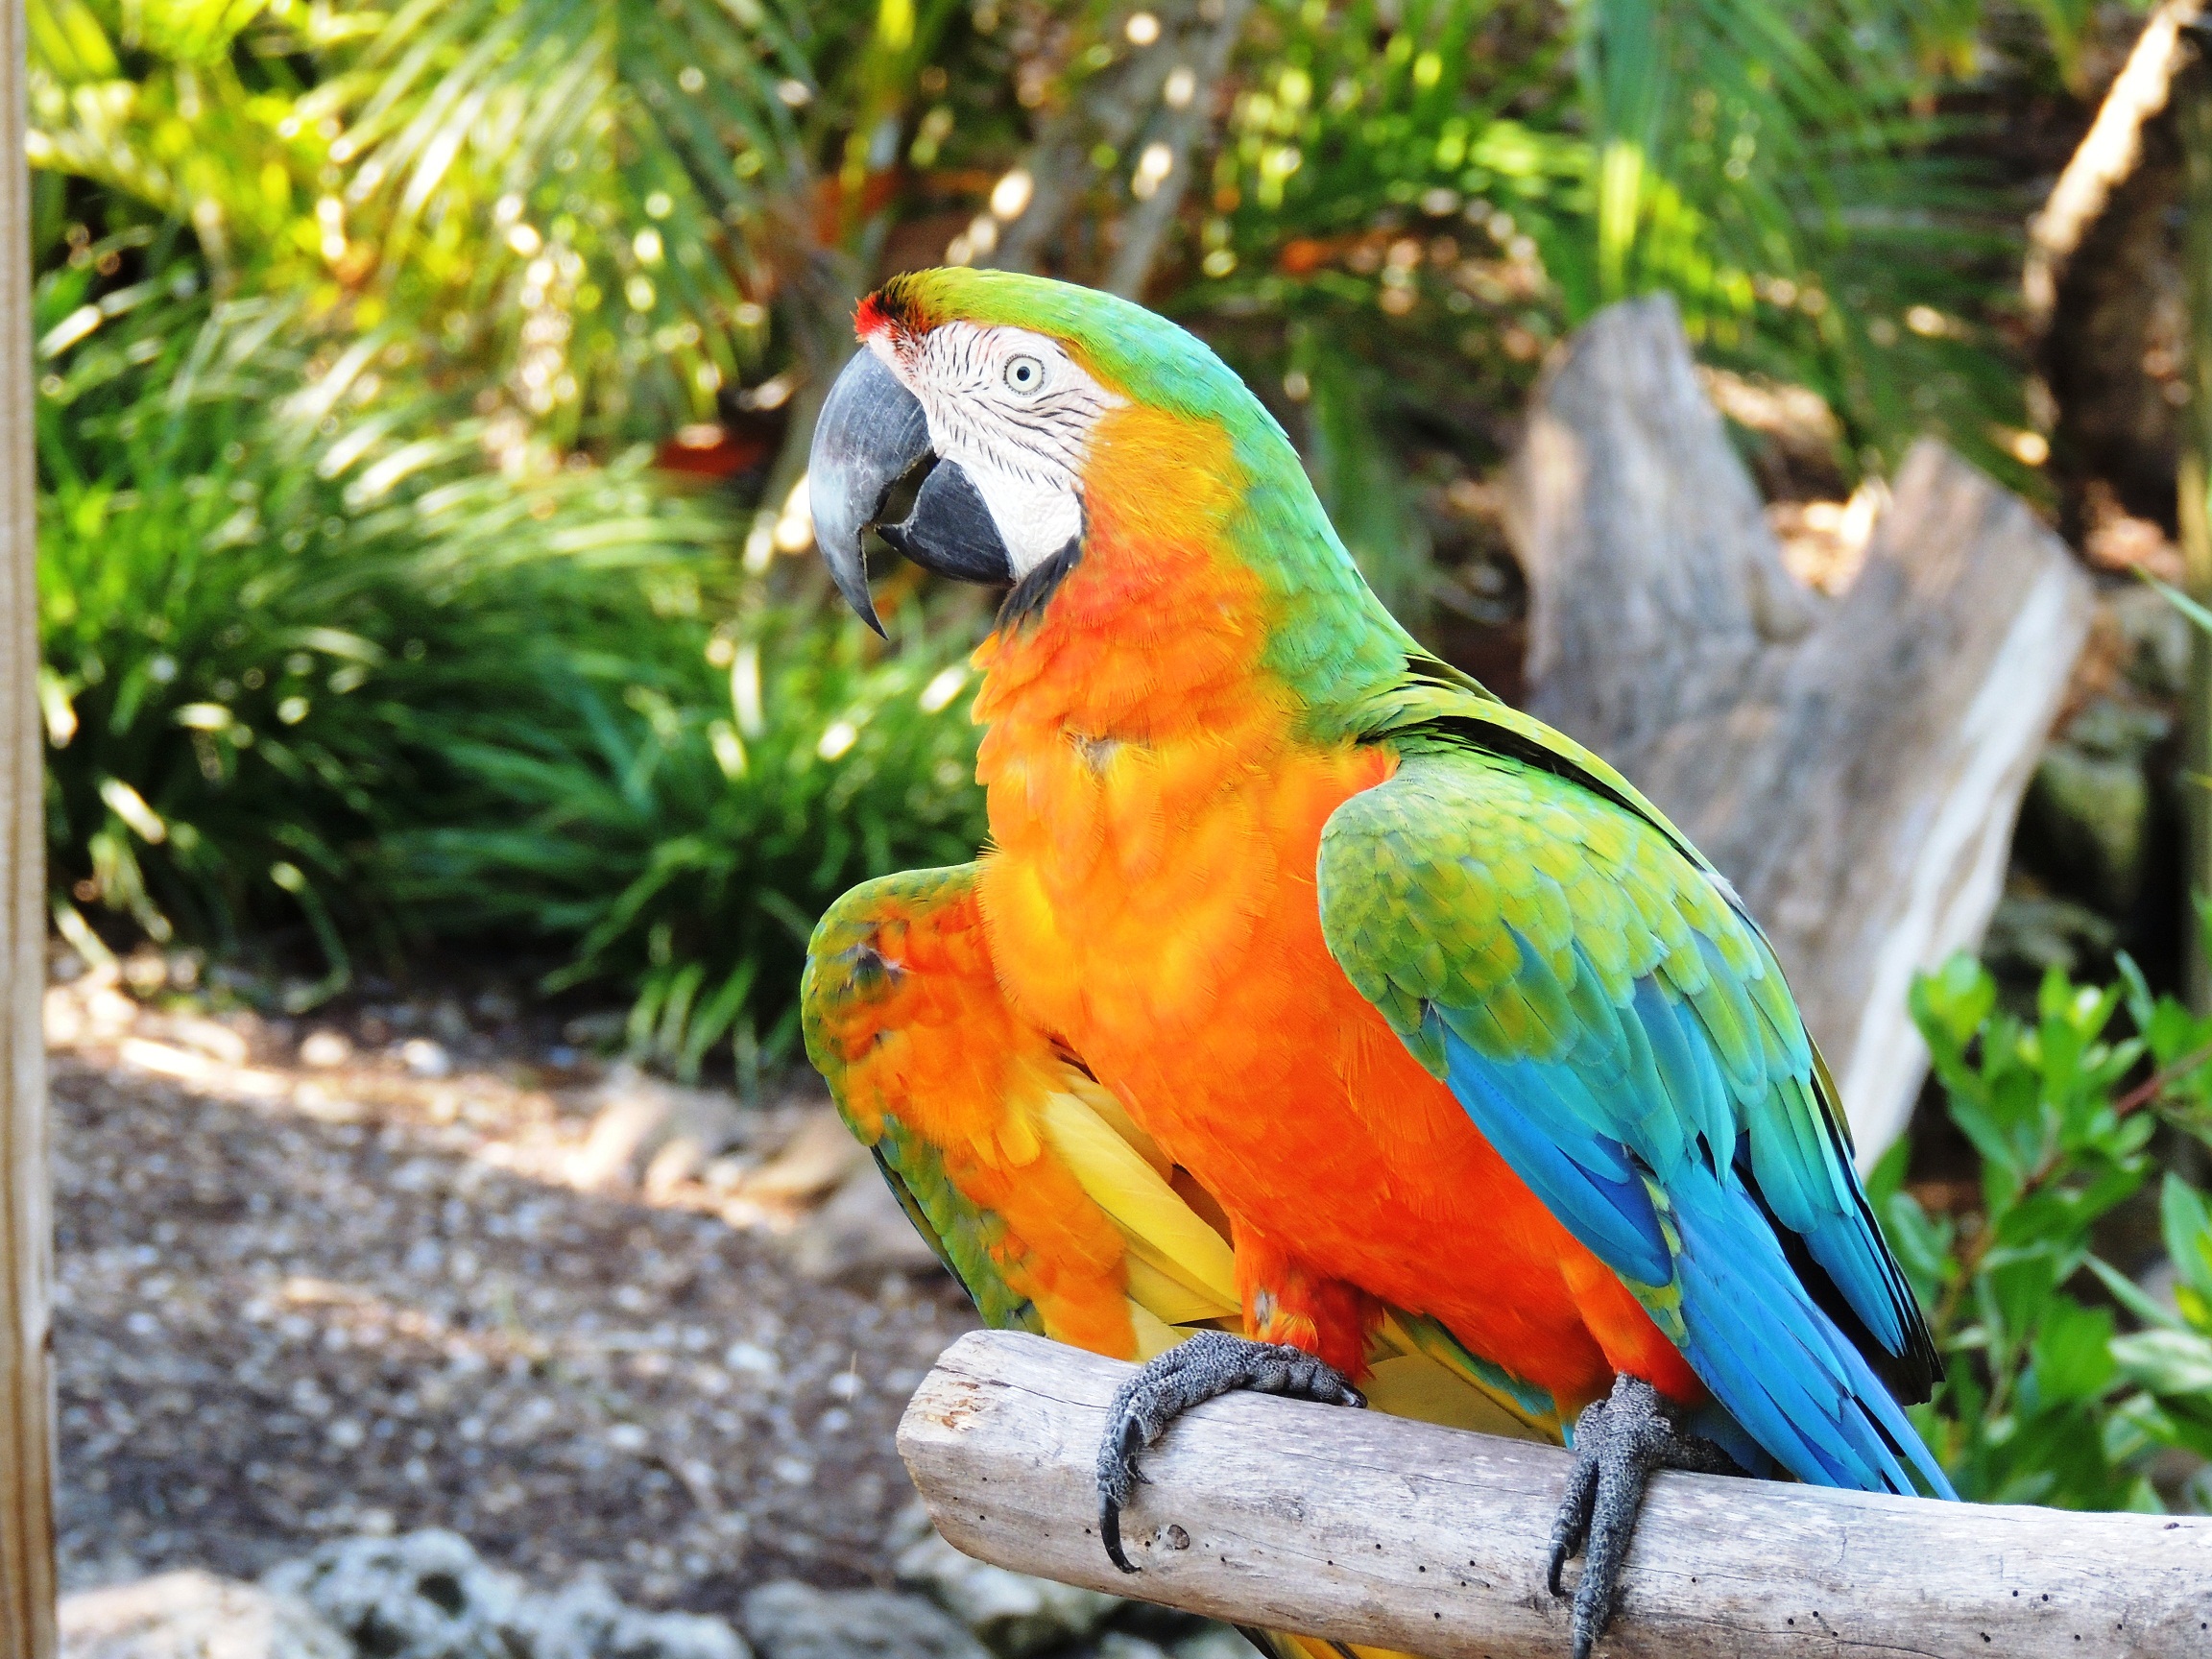 Harlequin Macaws